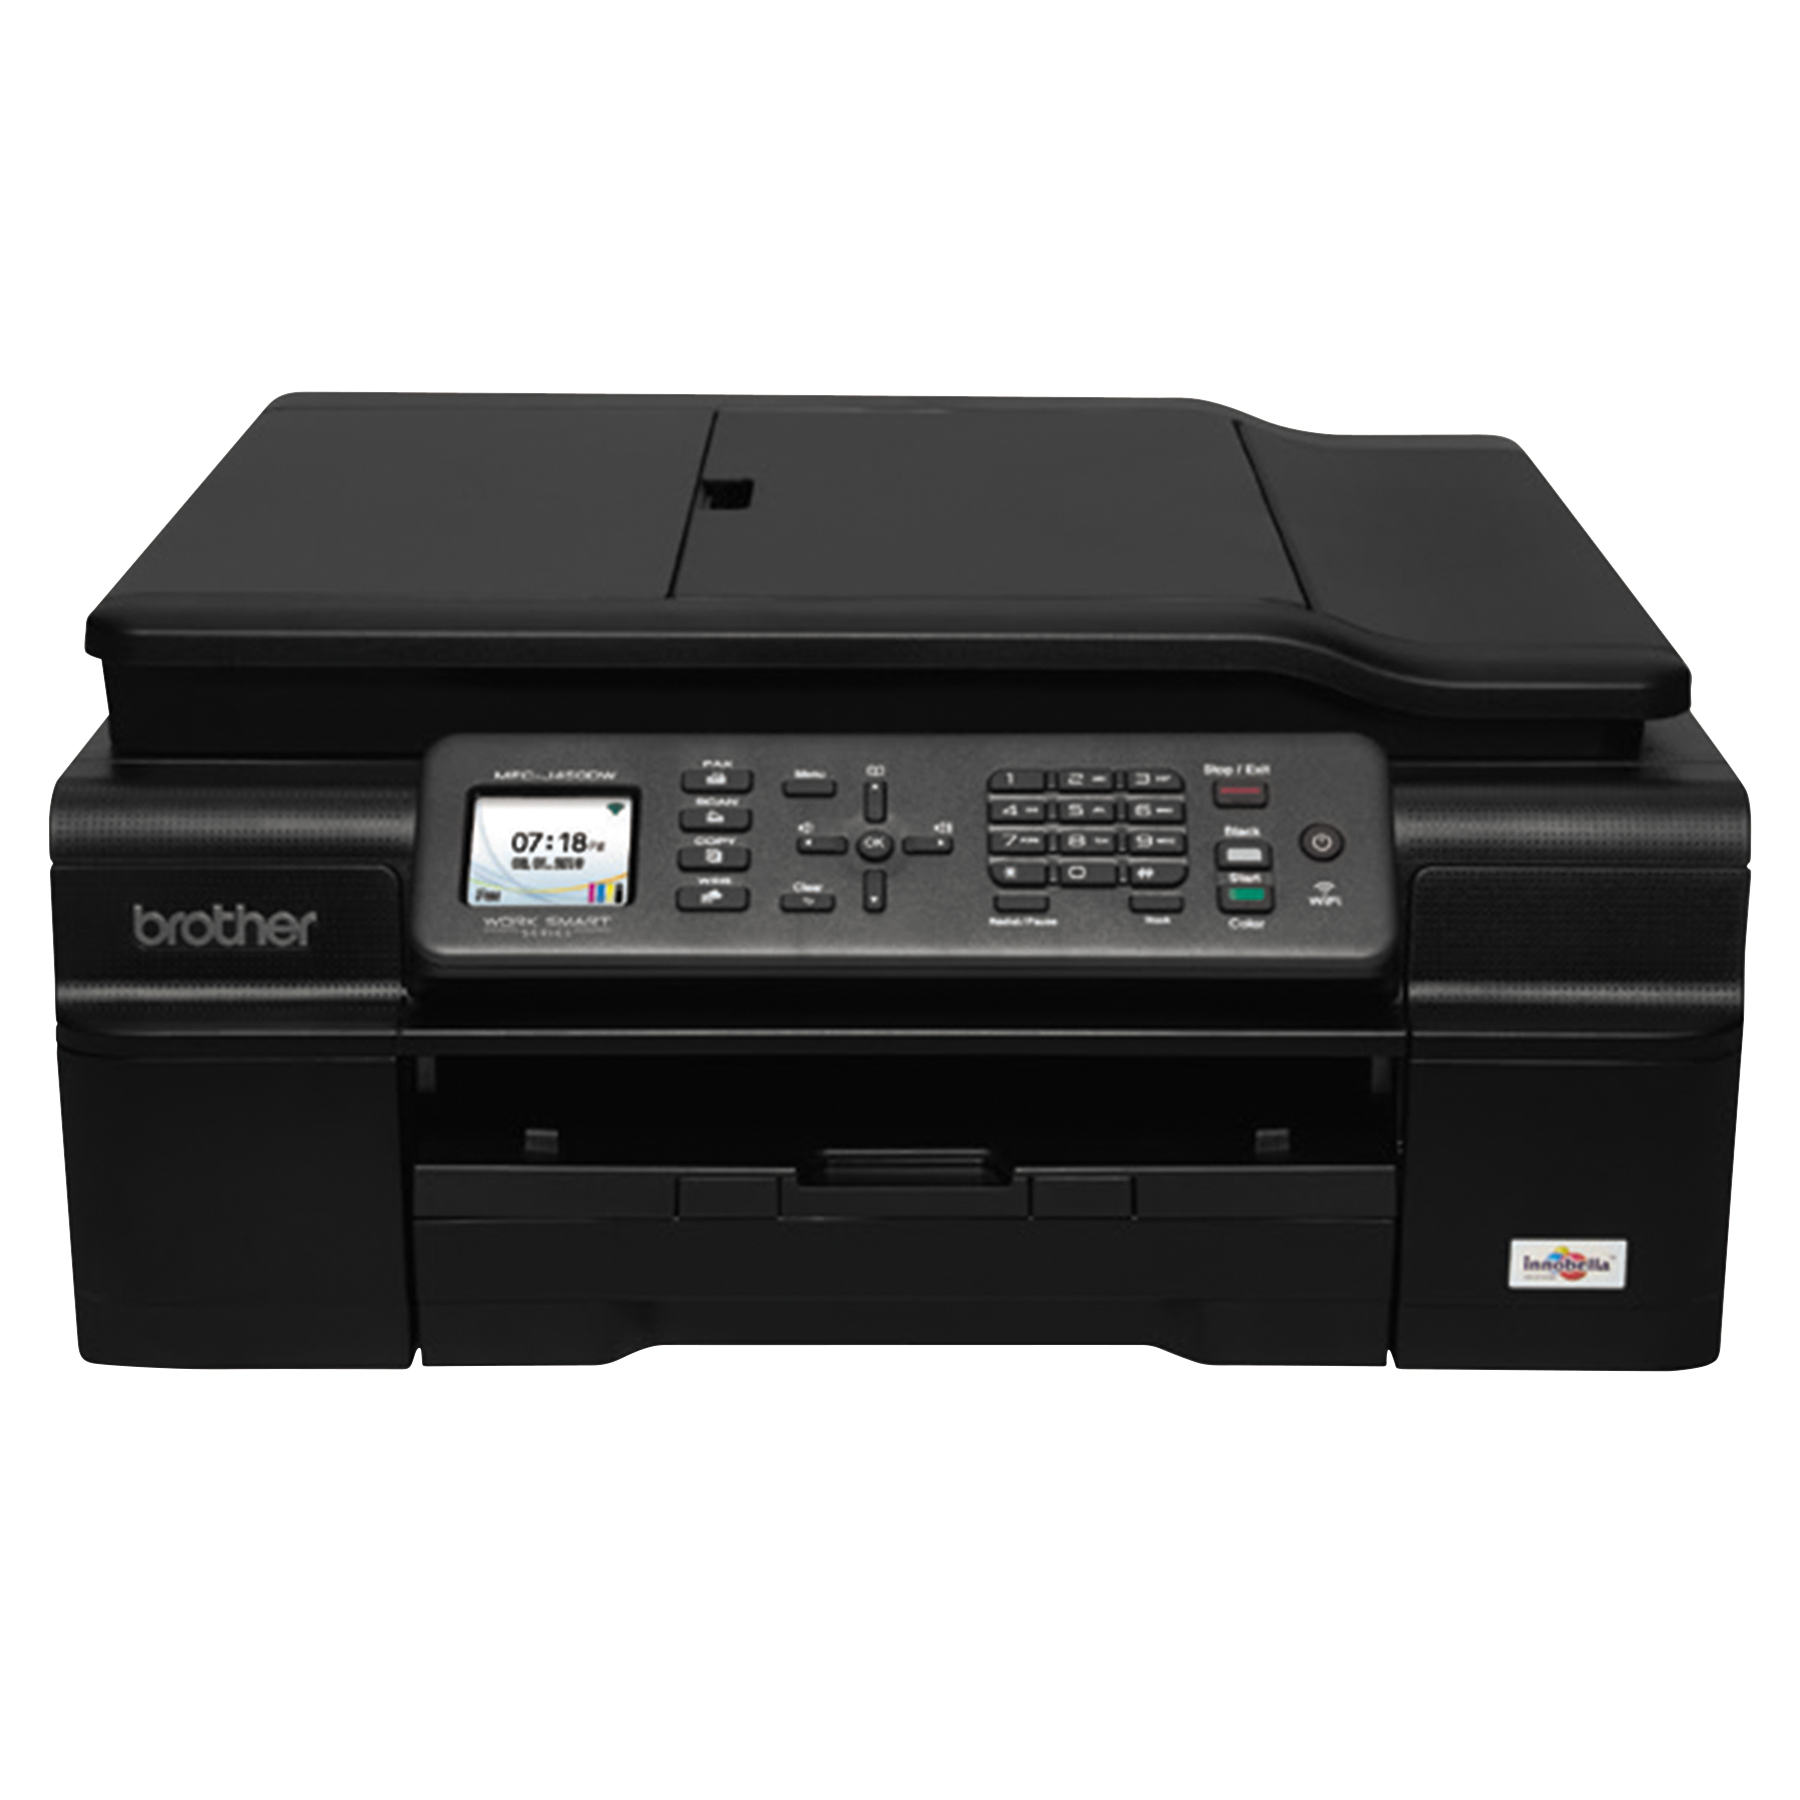 Brother BRTMFCJ460DW MFC-J460DW Work Smart Color Inkjet All-in-One, Copy/Fax/Print/Scan